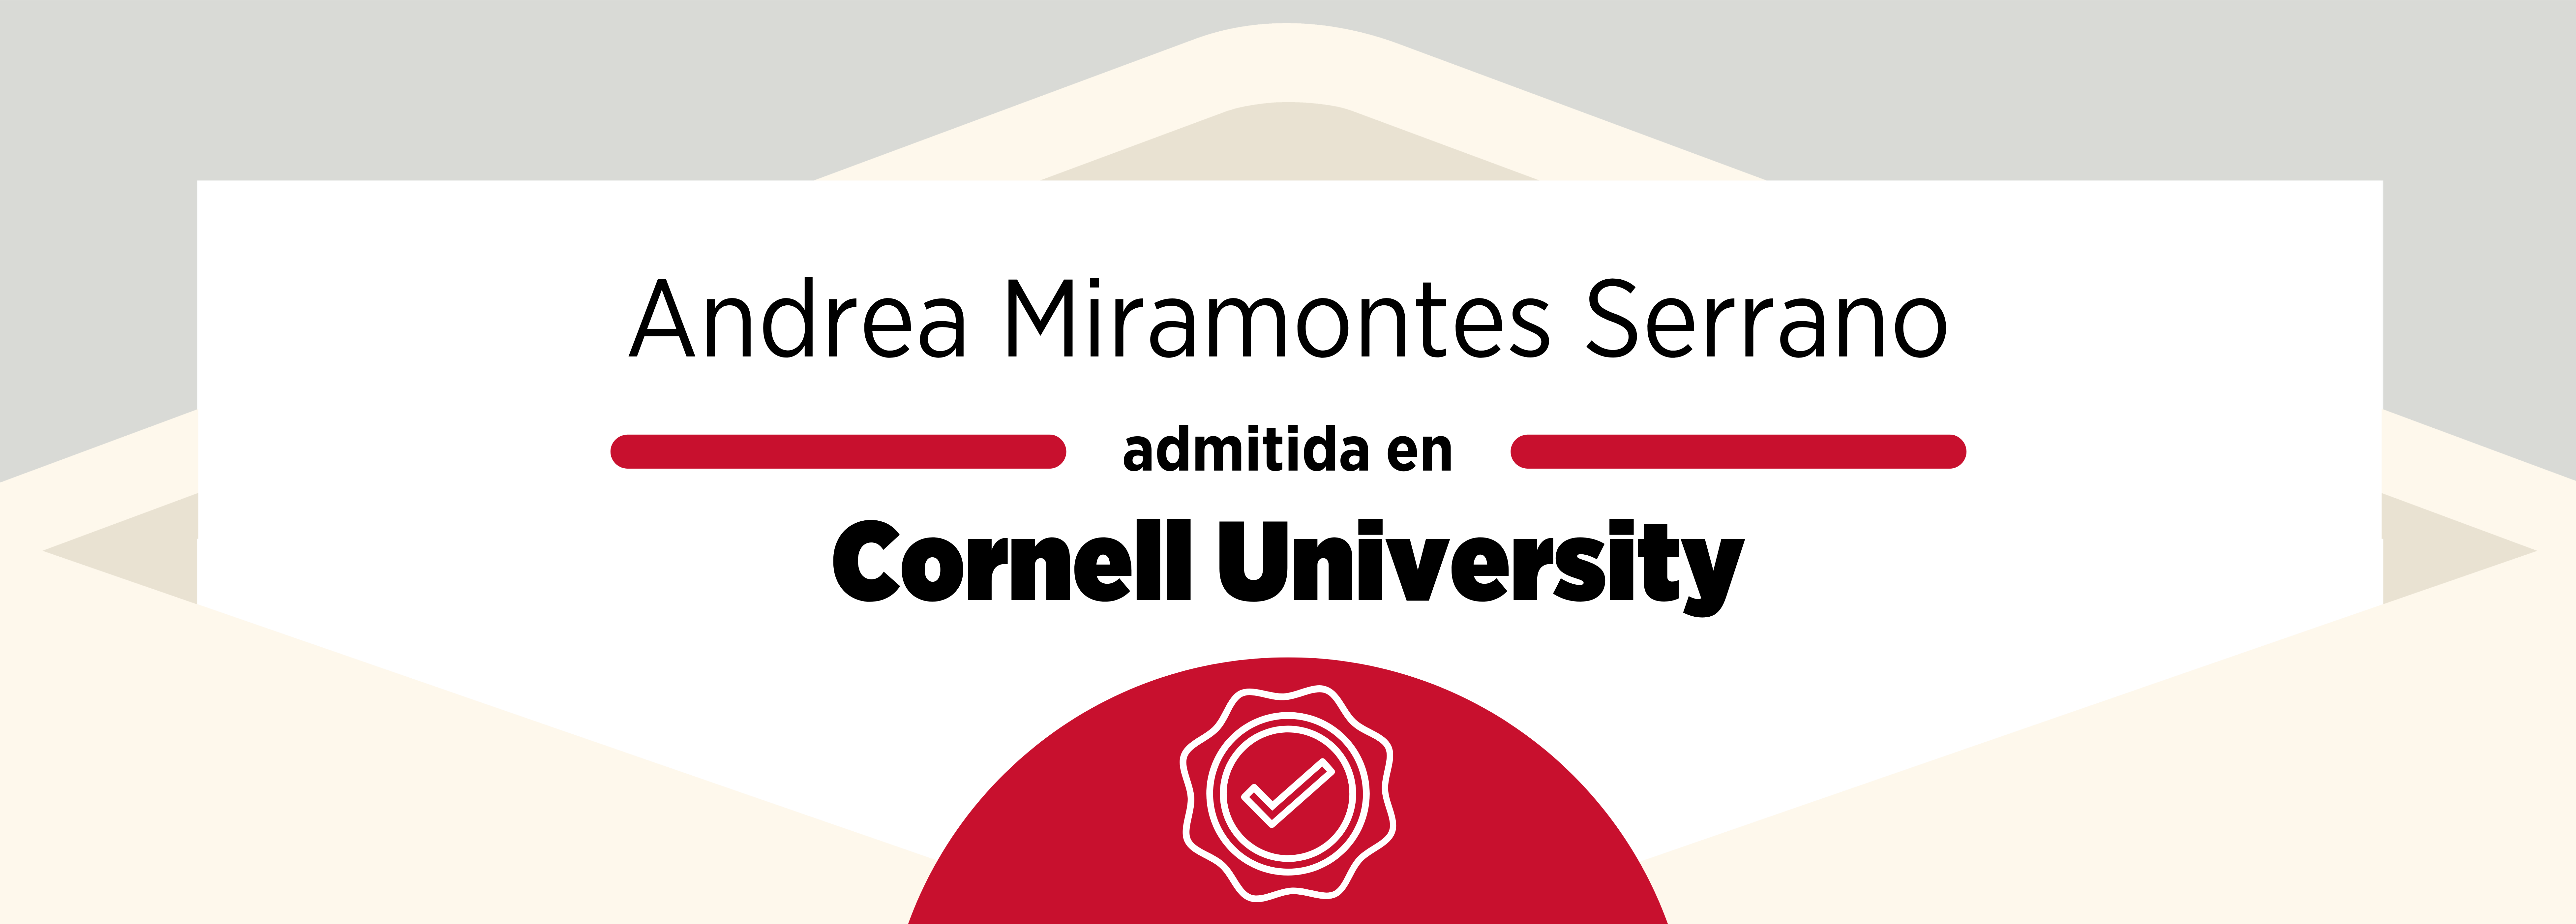 Admissions 2020: Andrea Miramontes Serrano & Cornell University